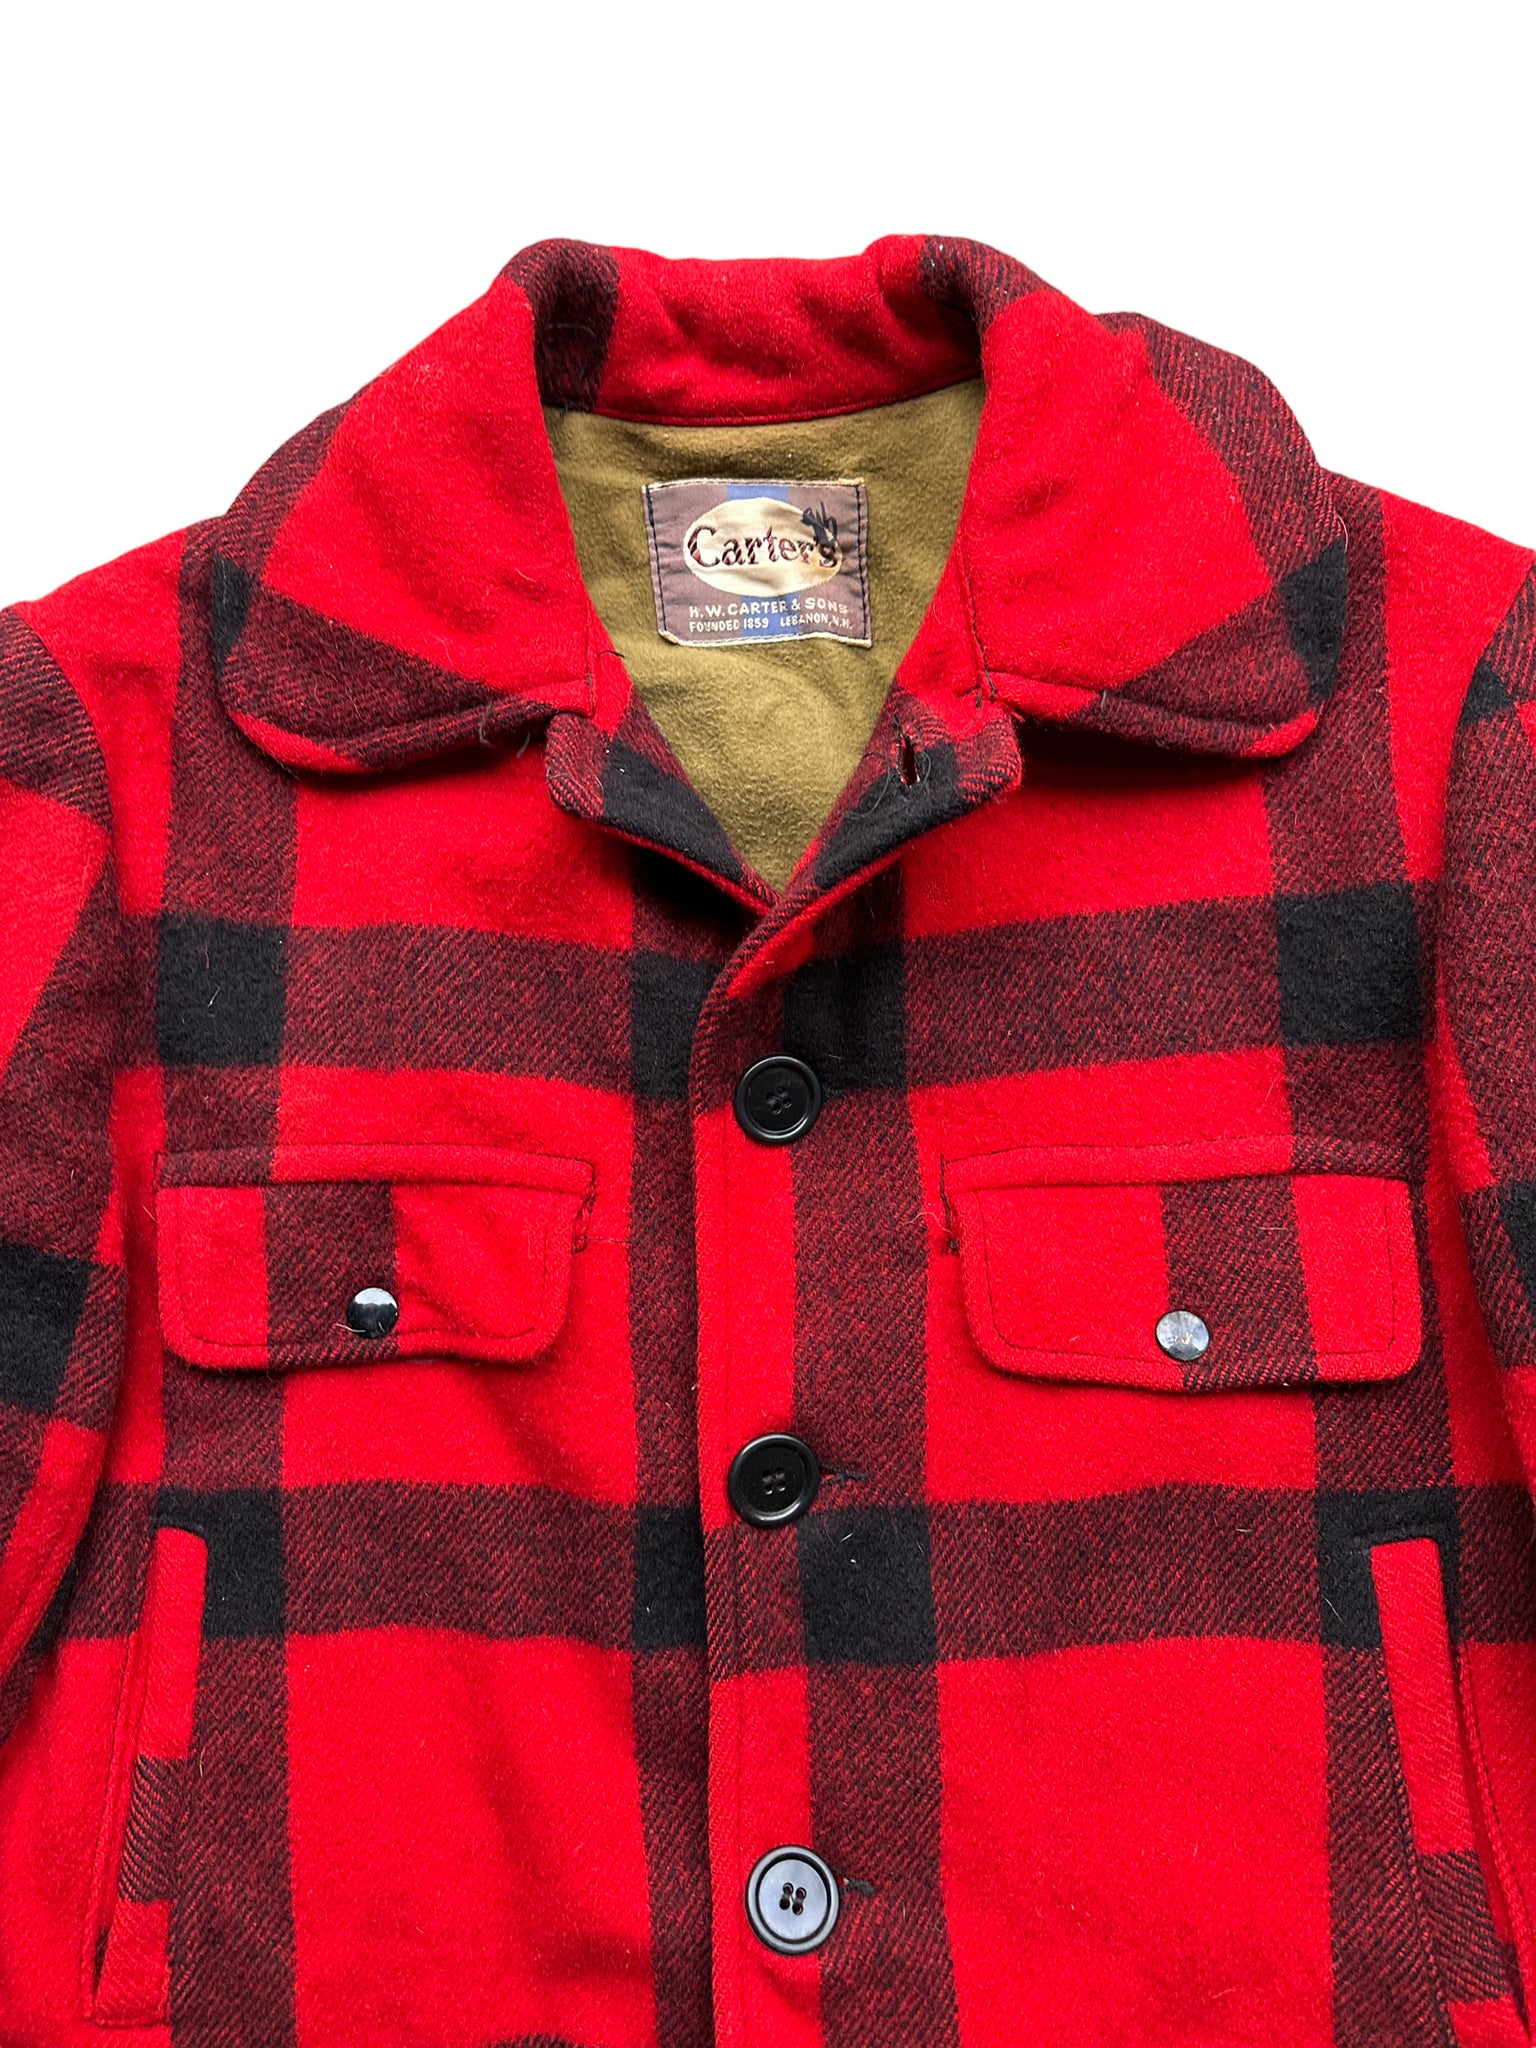 60s Carters wool jacket S/M